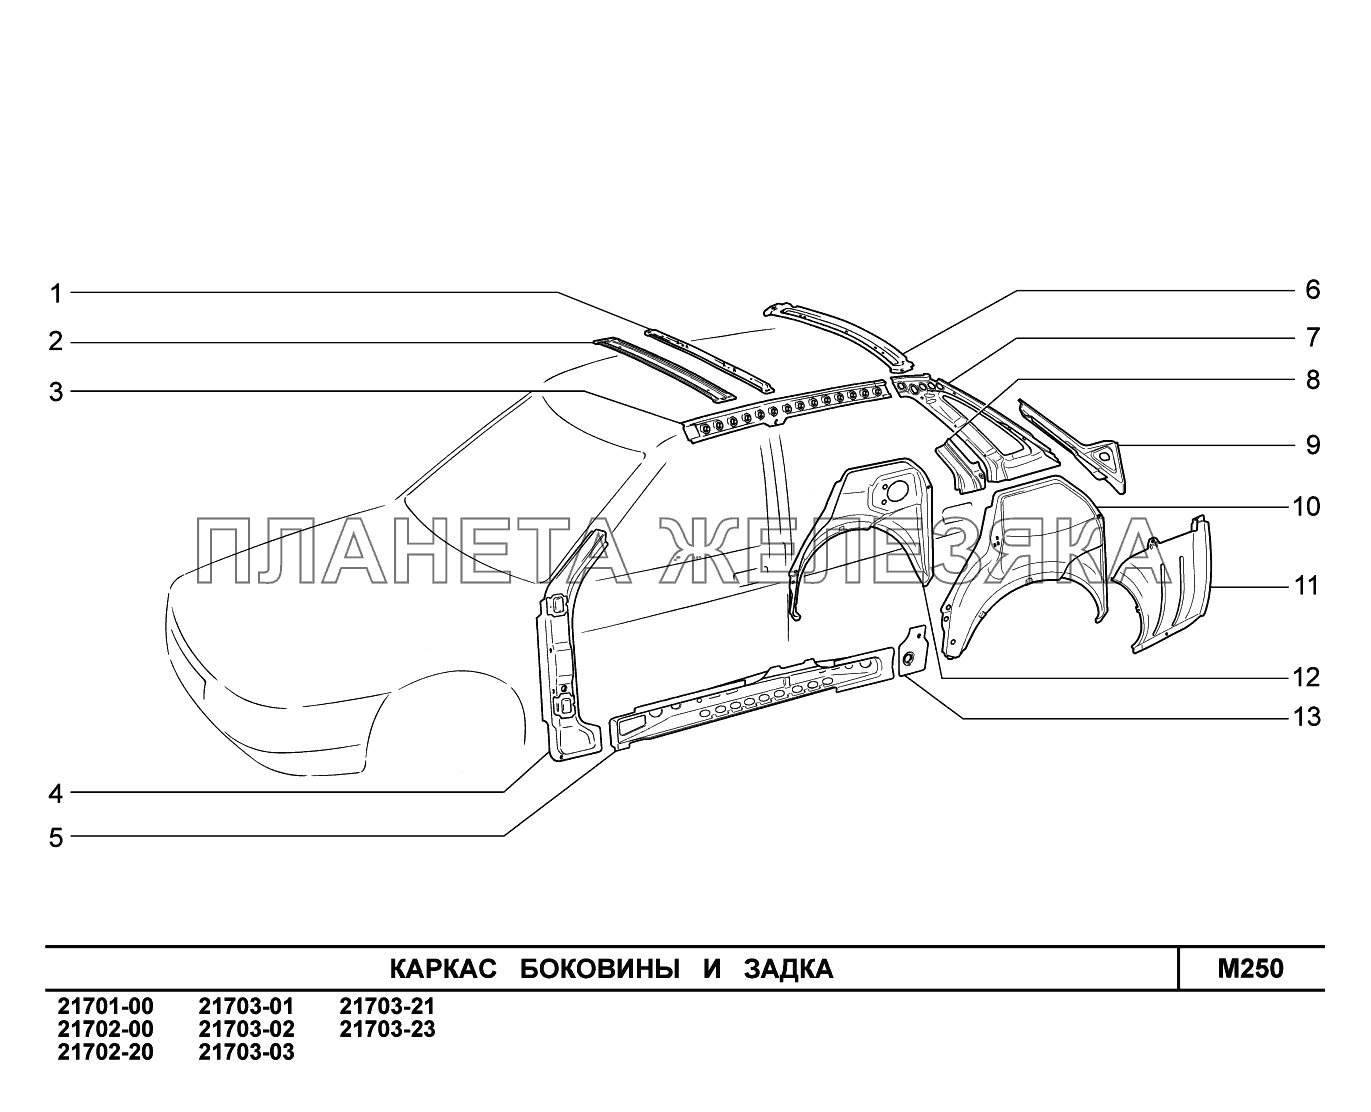 M250. Каркас боковины и задка ВАЗ-2170 